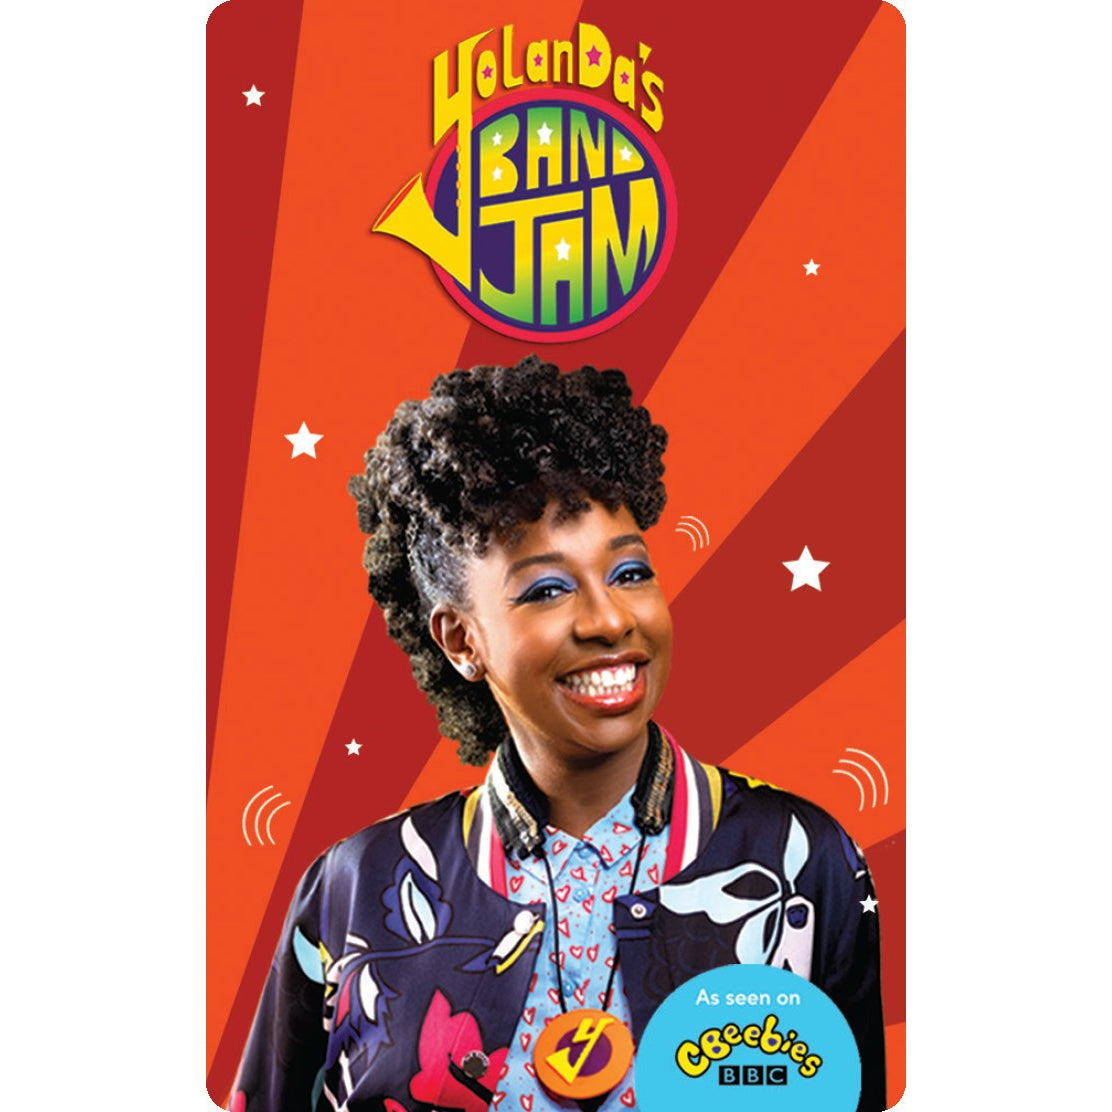 Yoto Card - YolanDa's Band jam - Child Friendly Audio Story Card for the Yoto Player